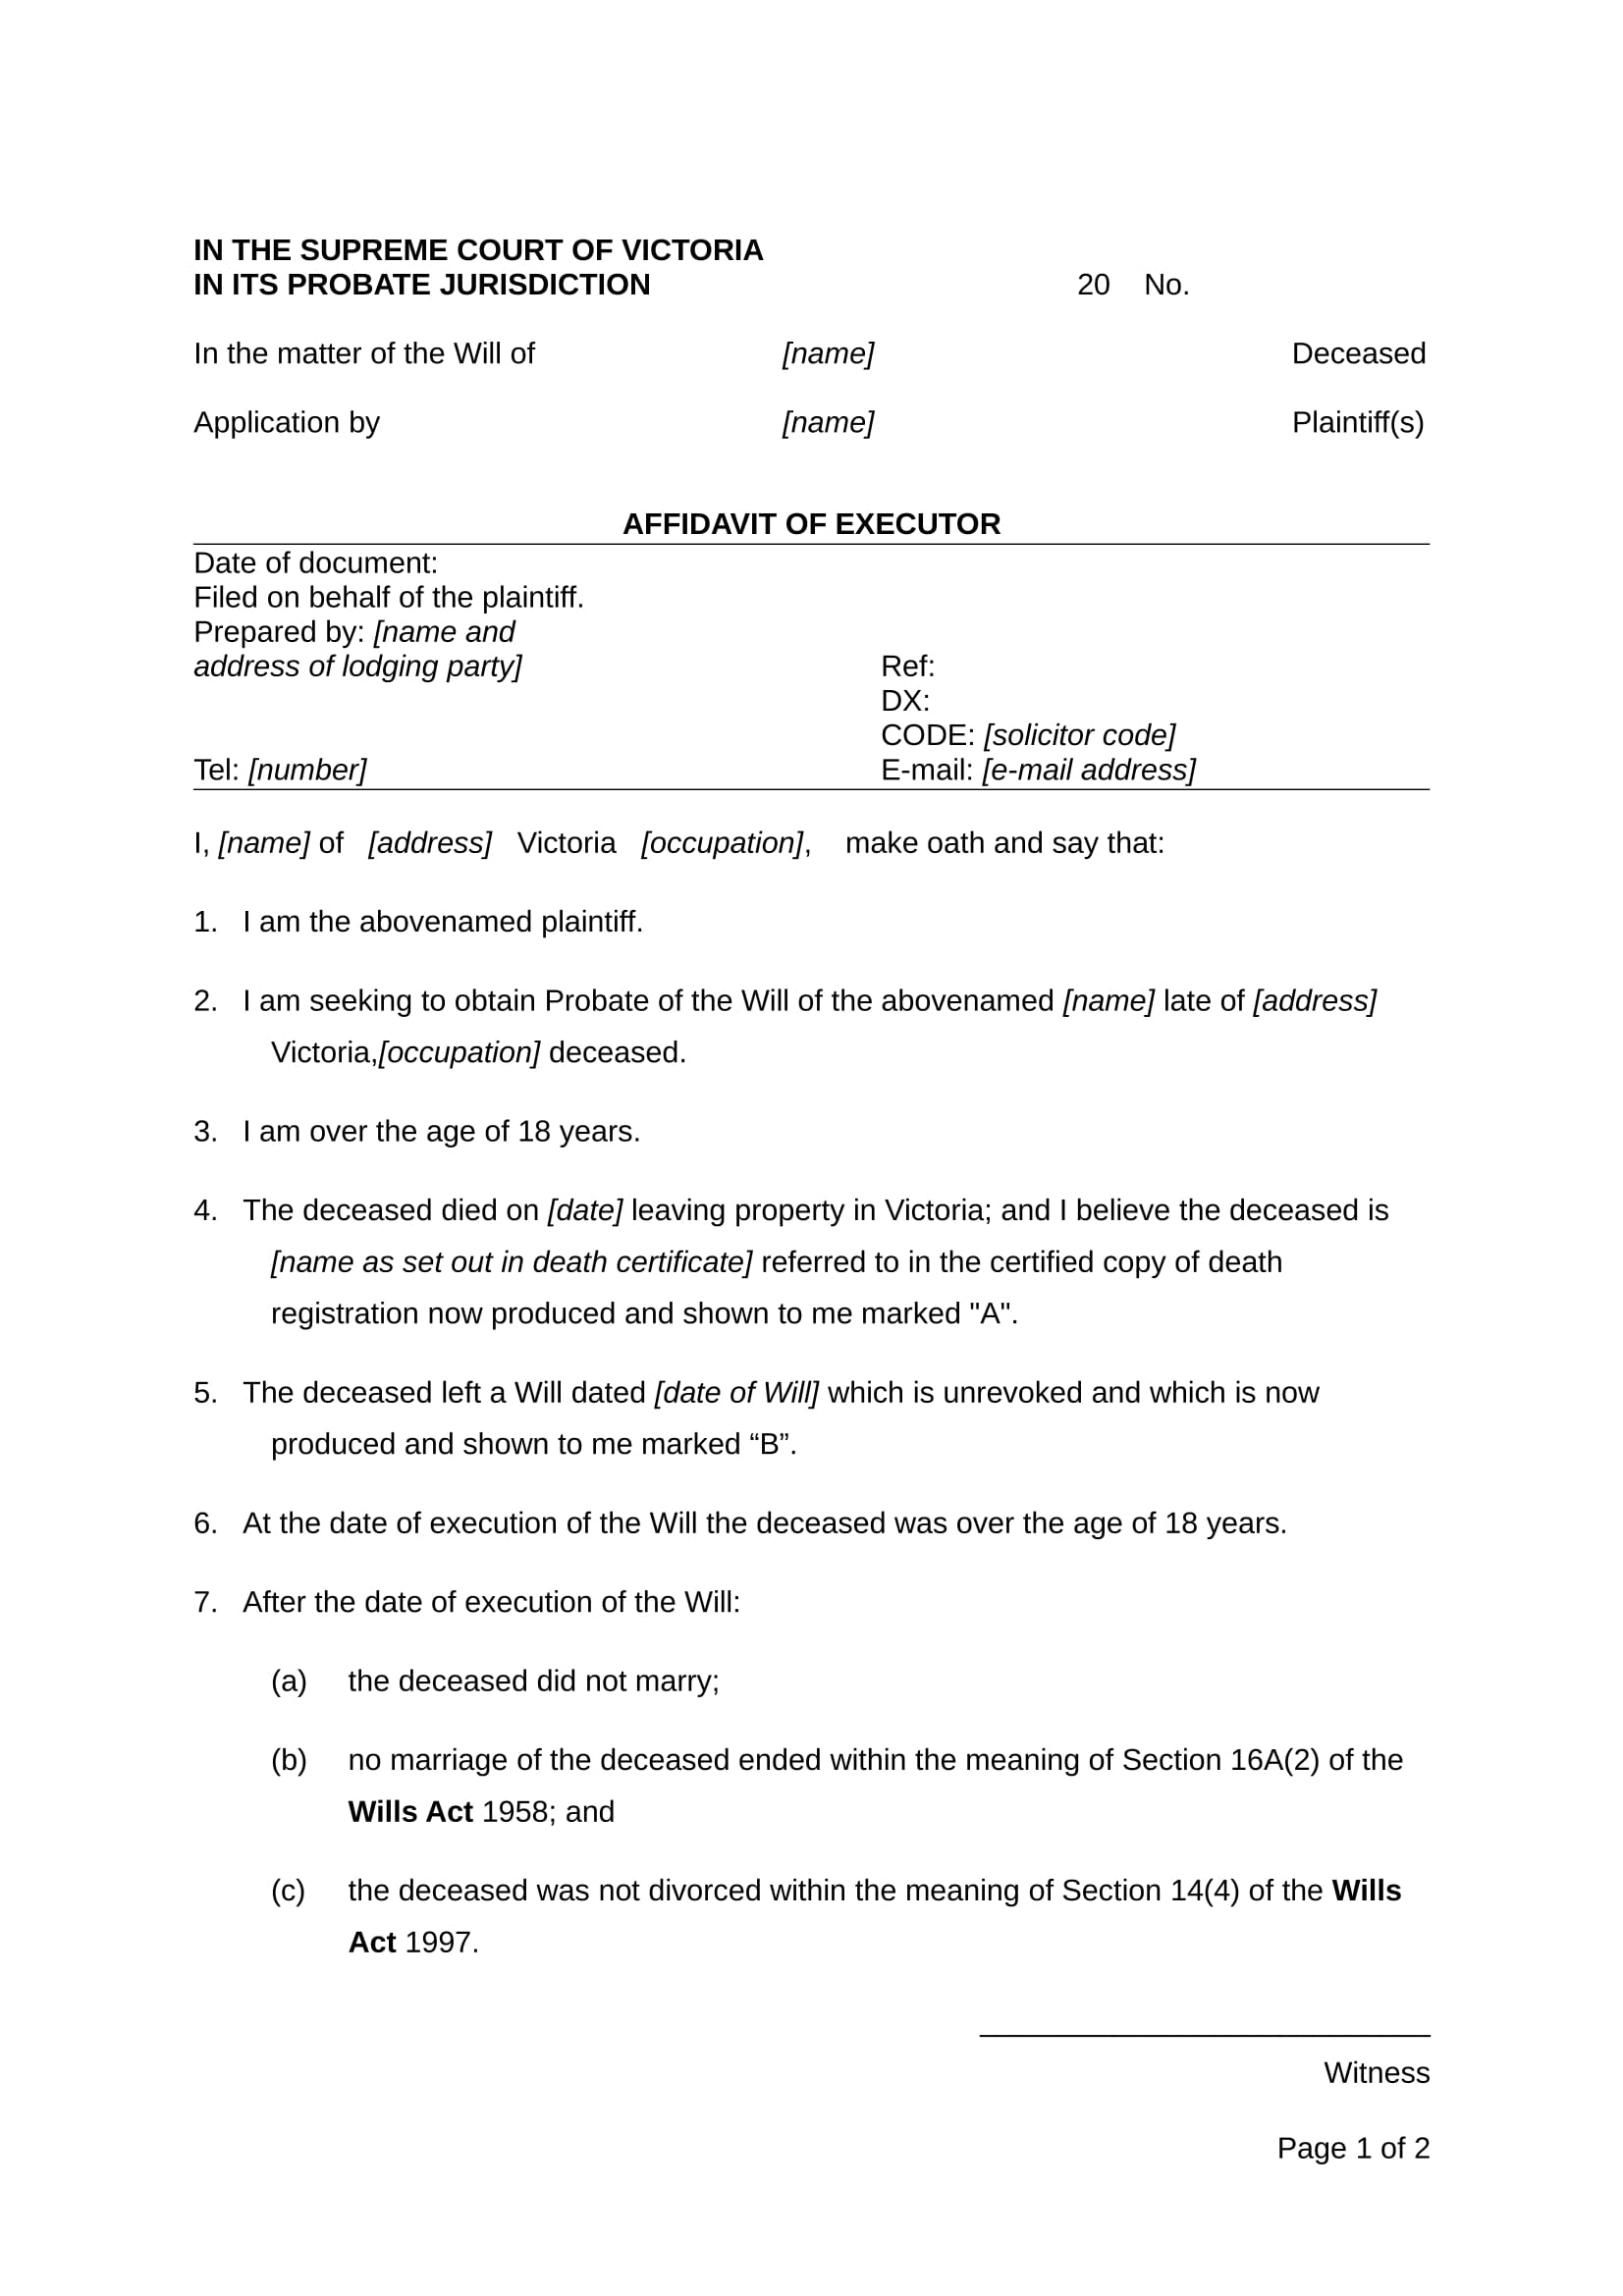 affidavit of executor form sample 1